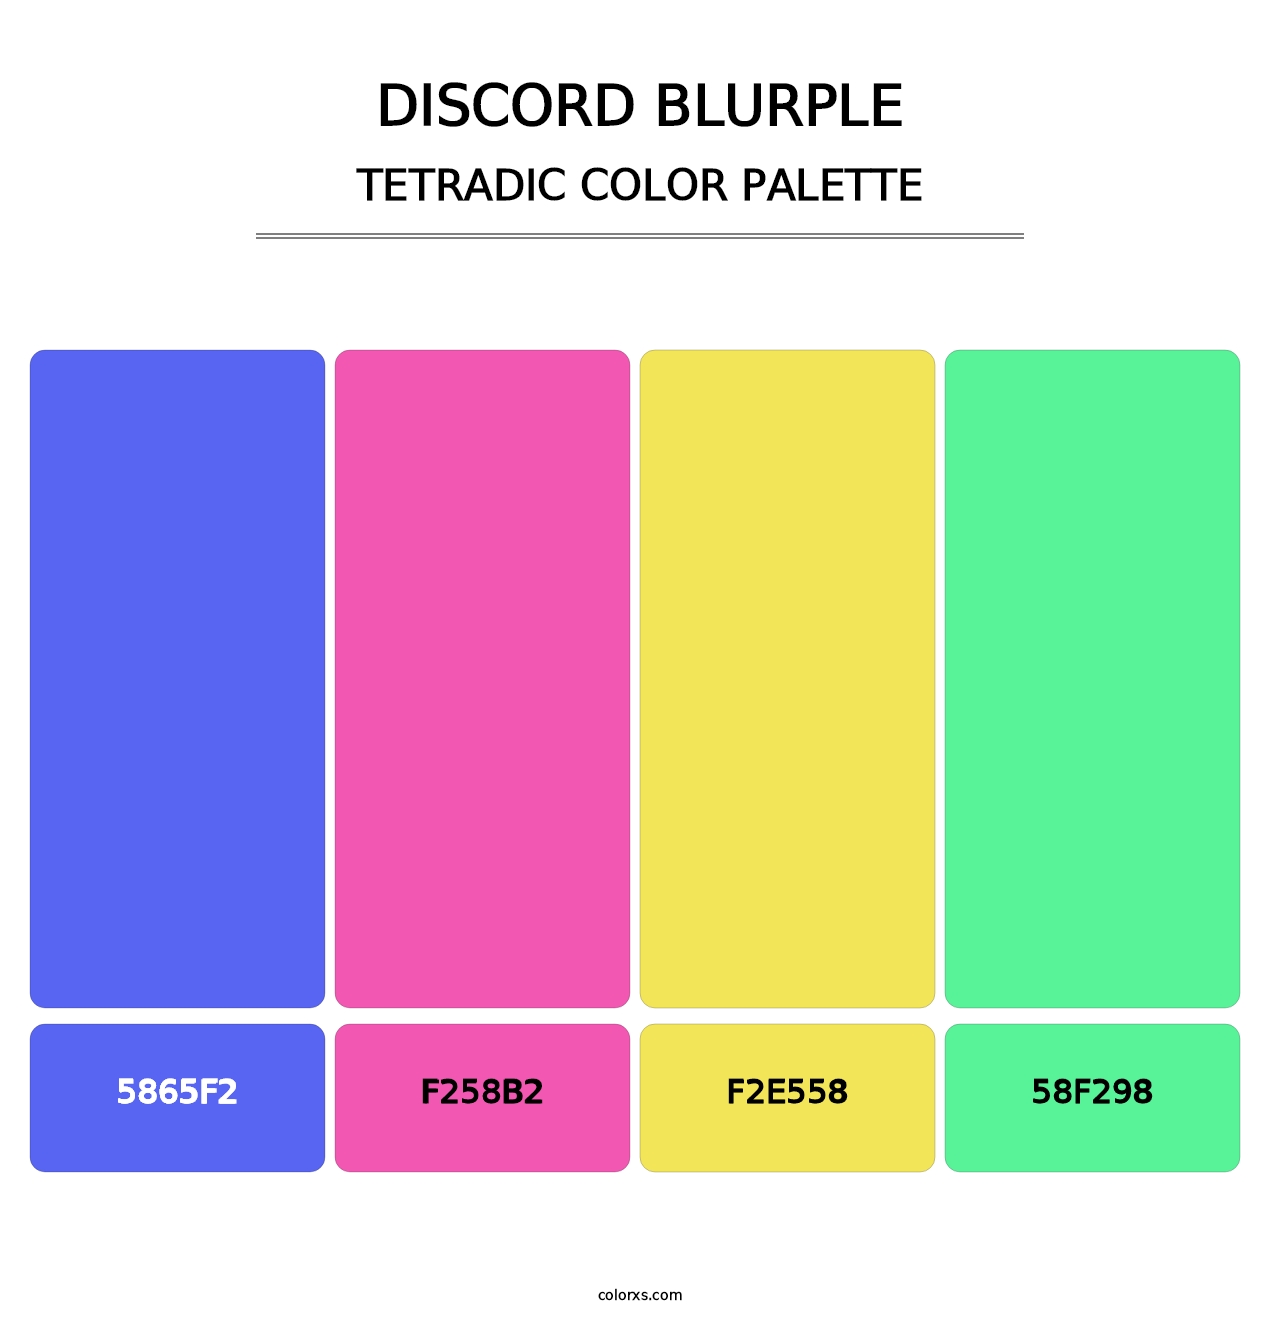 Discord Blurple - Tetradic Color Palette